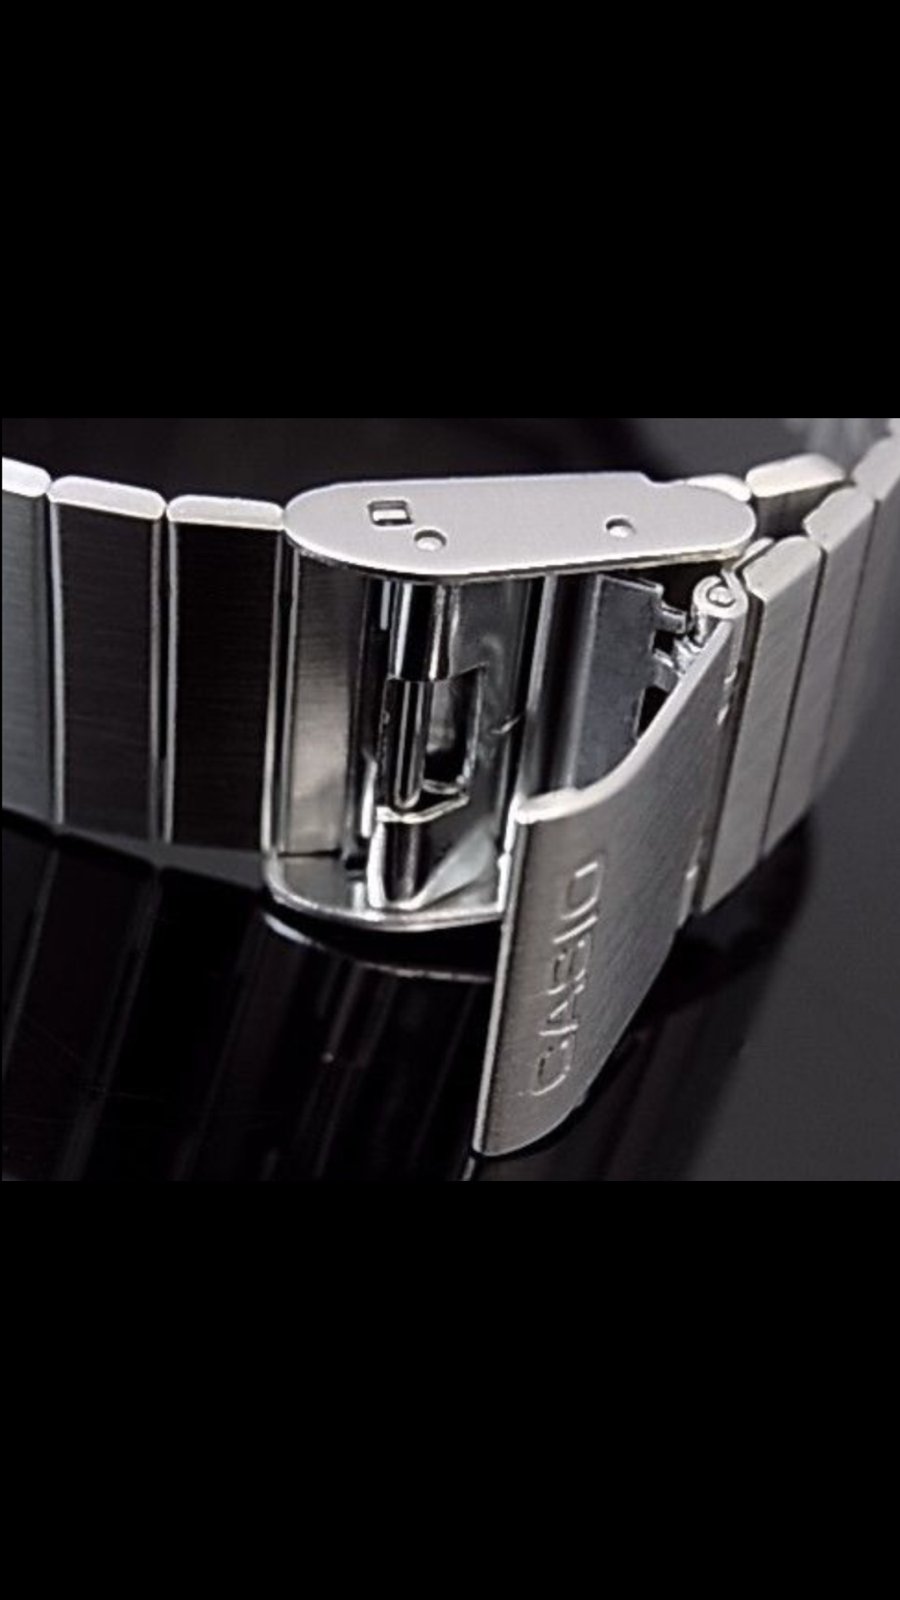 W218HD-1AV | Silver Digital Watch | CASIO